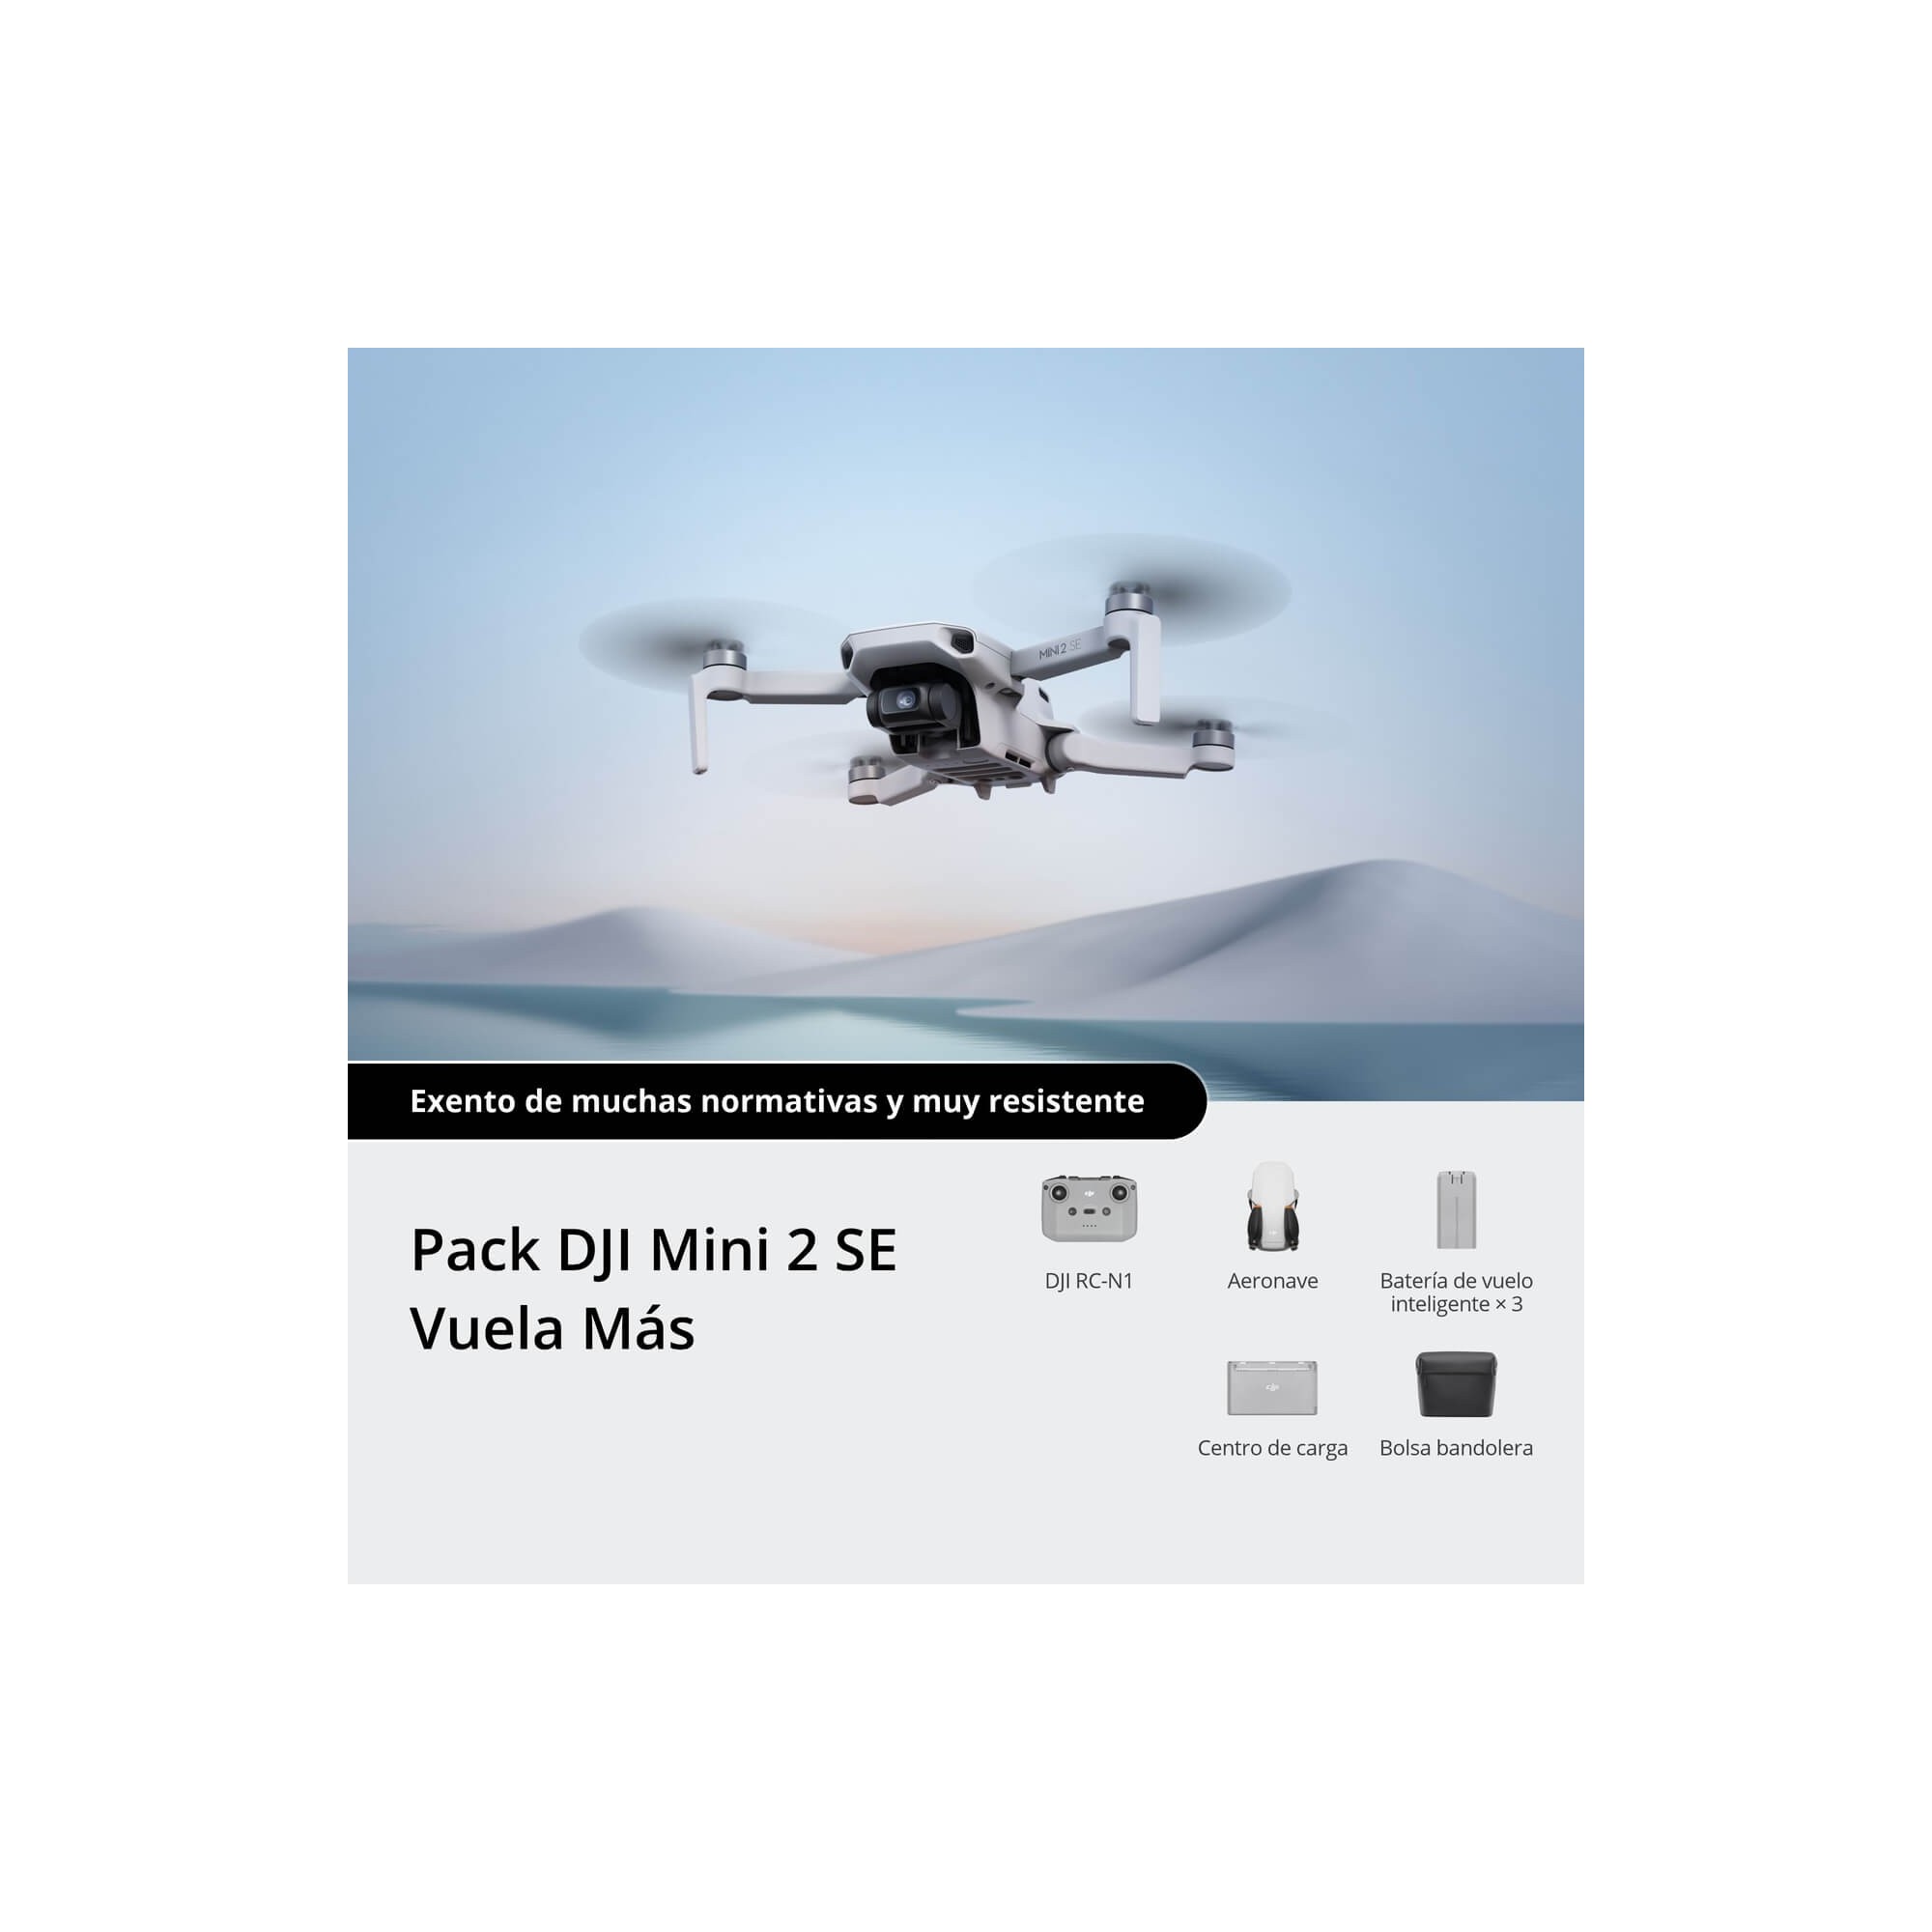 Comprar DJI Mini 2 SE Pack Vuela Más